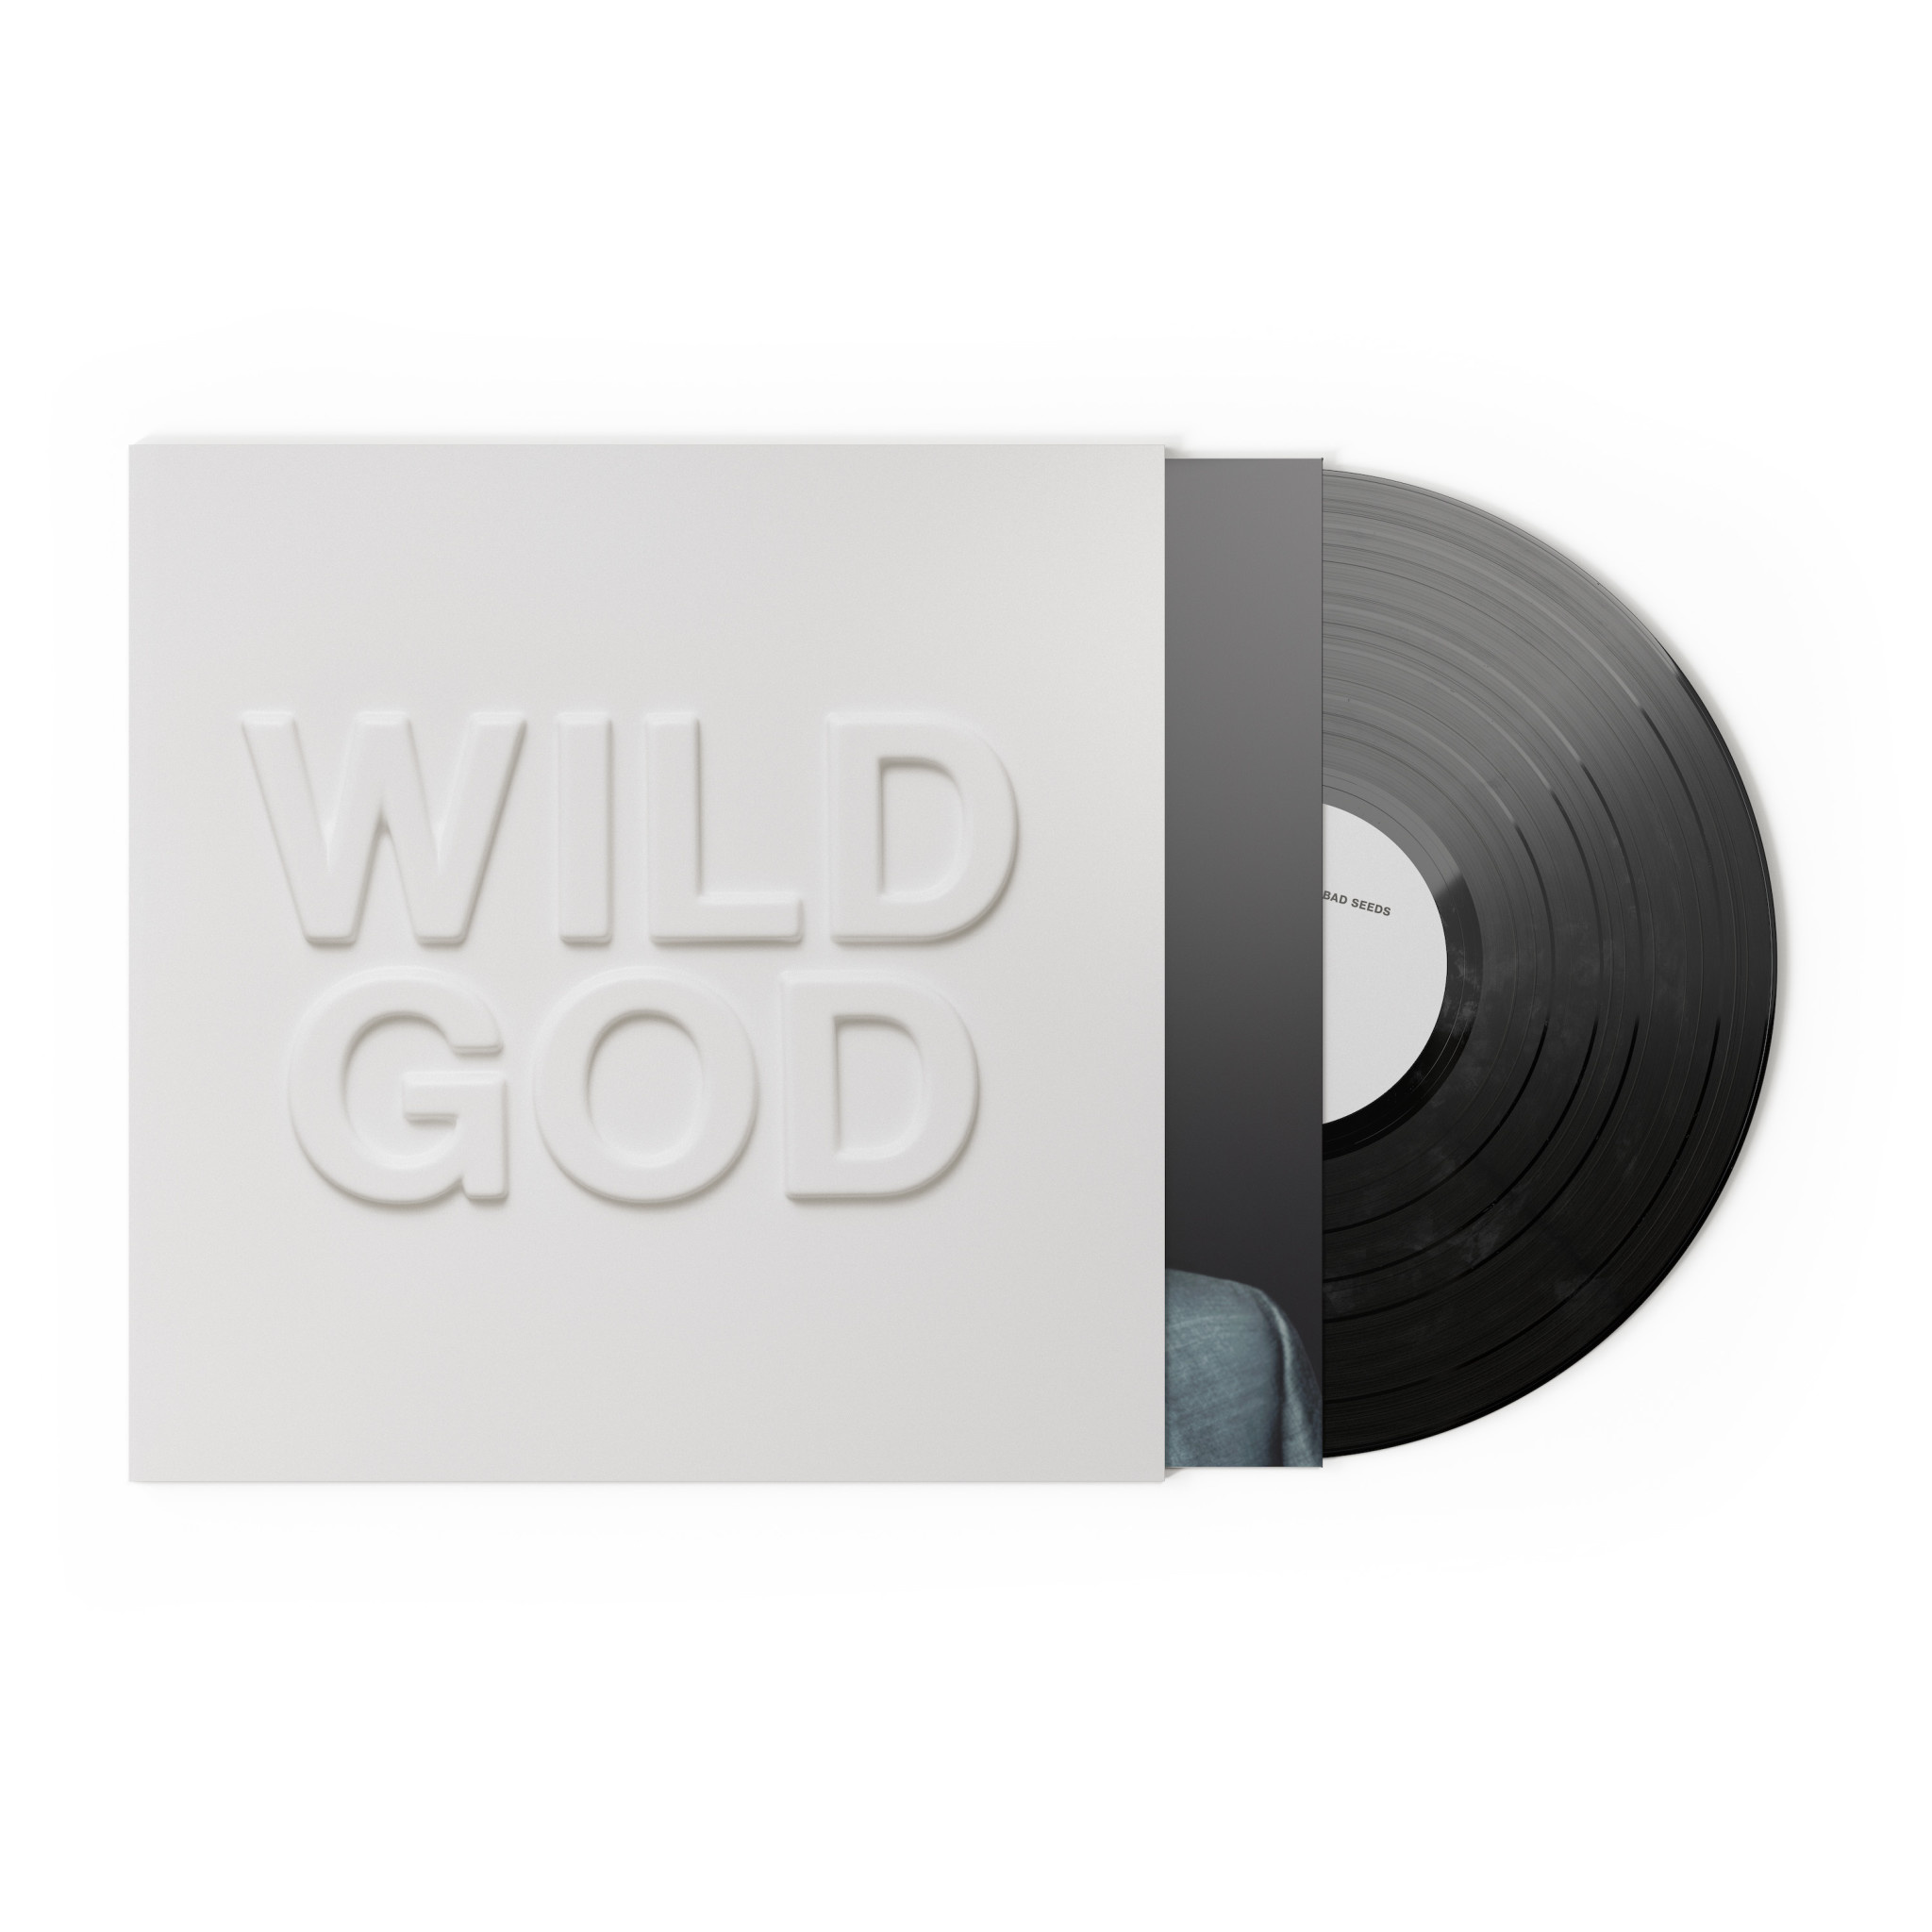 Bad Seed Ltd Nick Cave & The Bad Seeds - Wild God